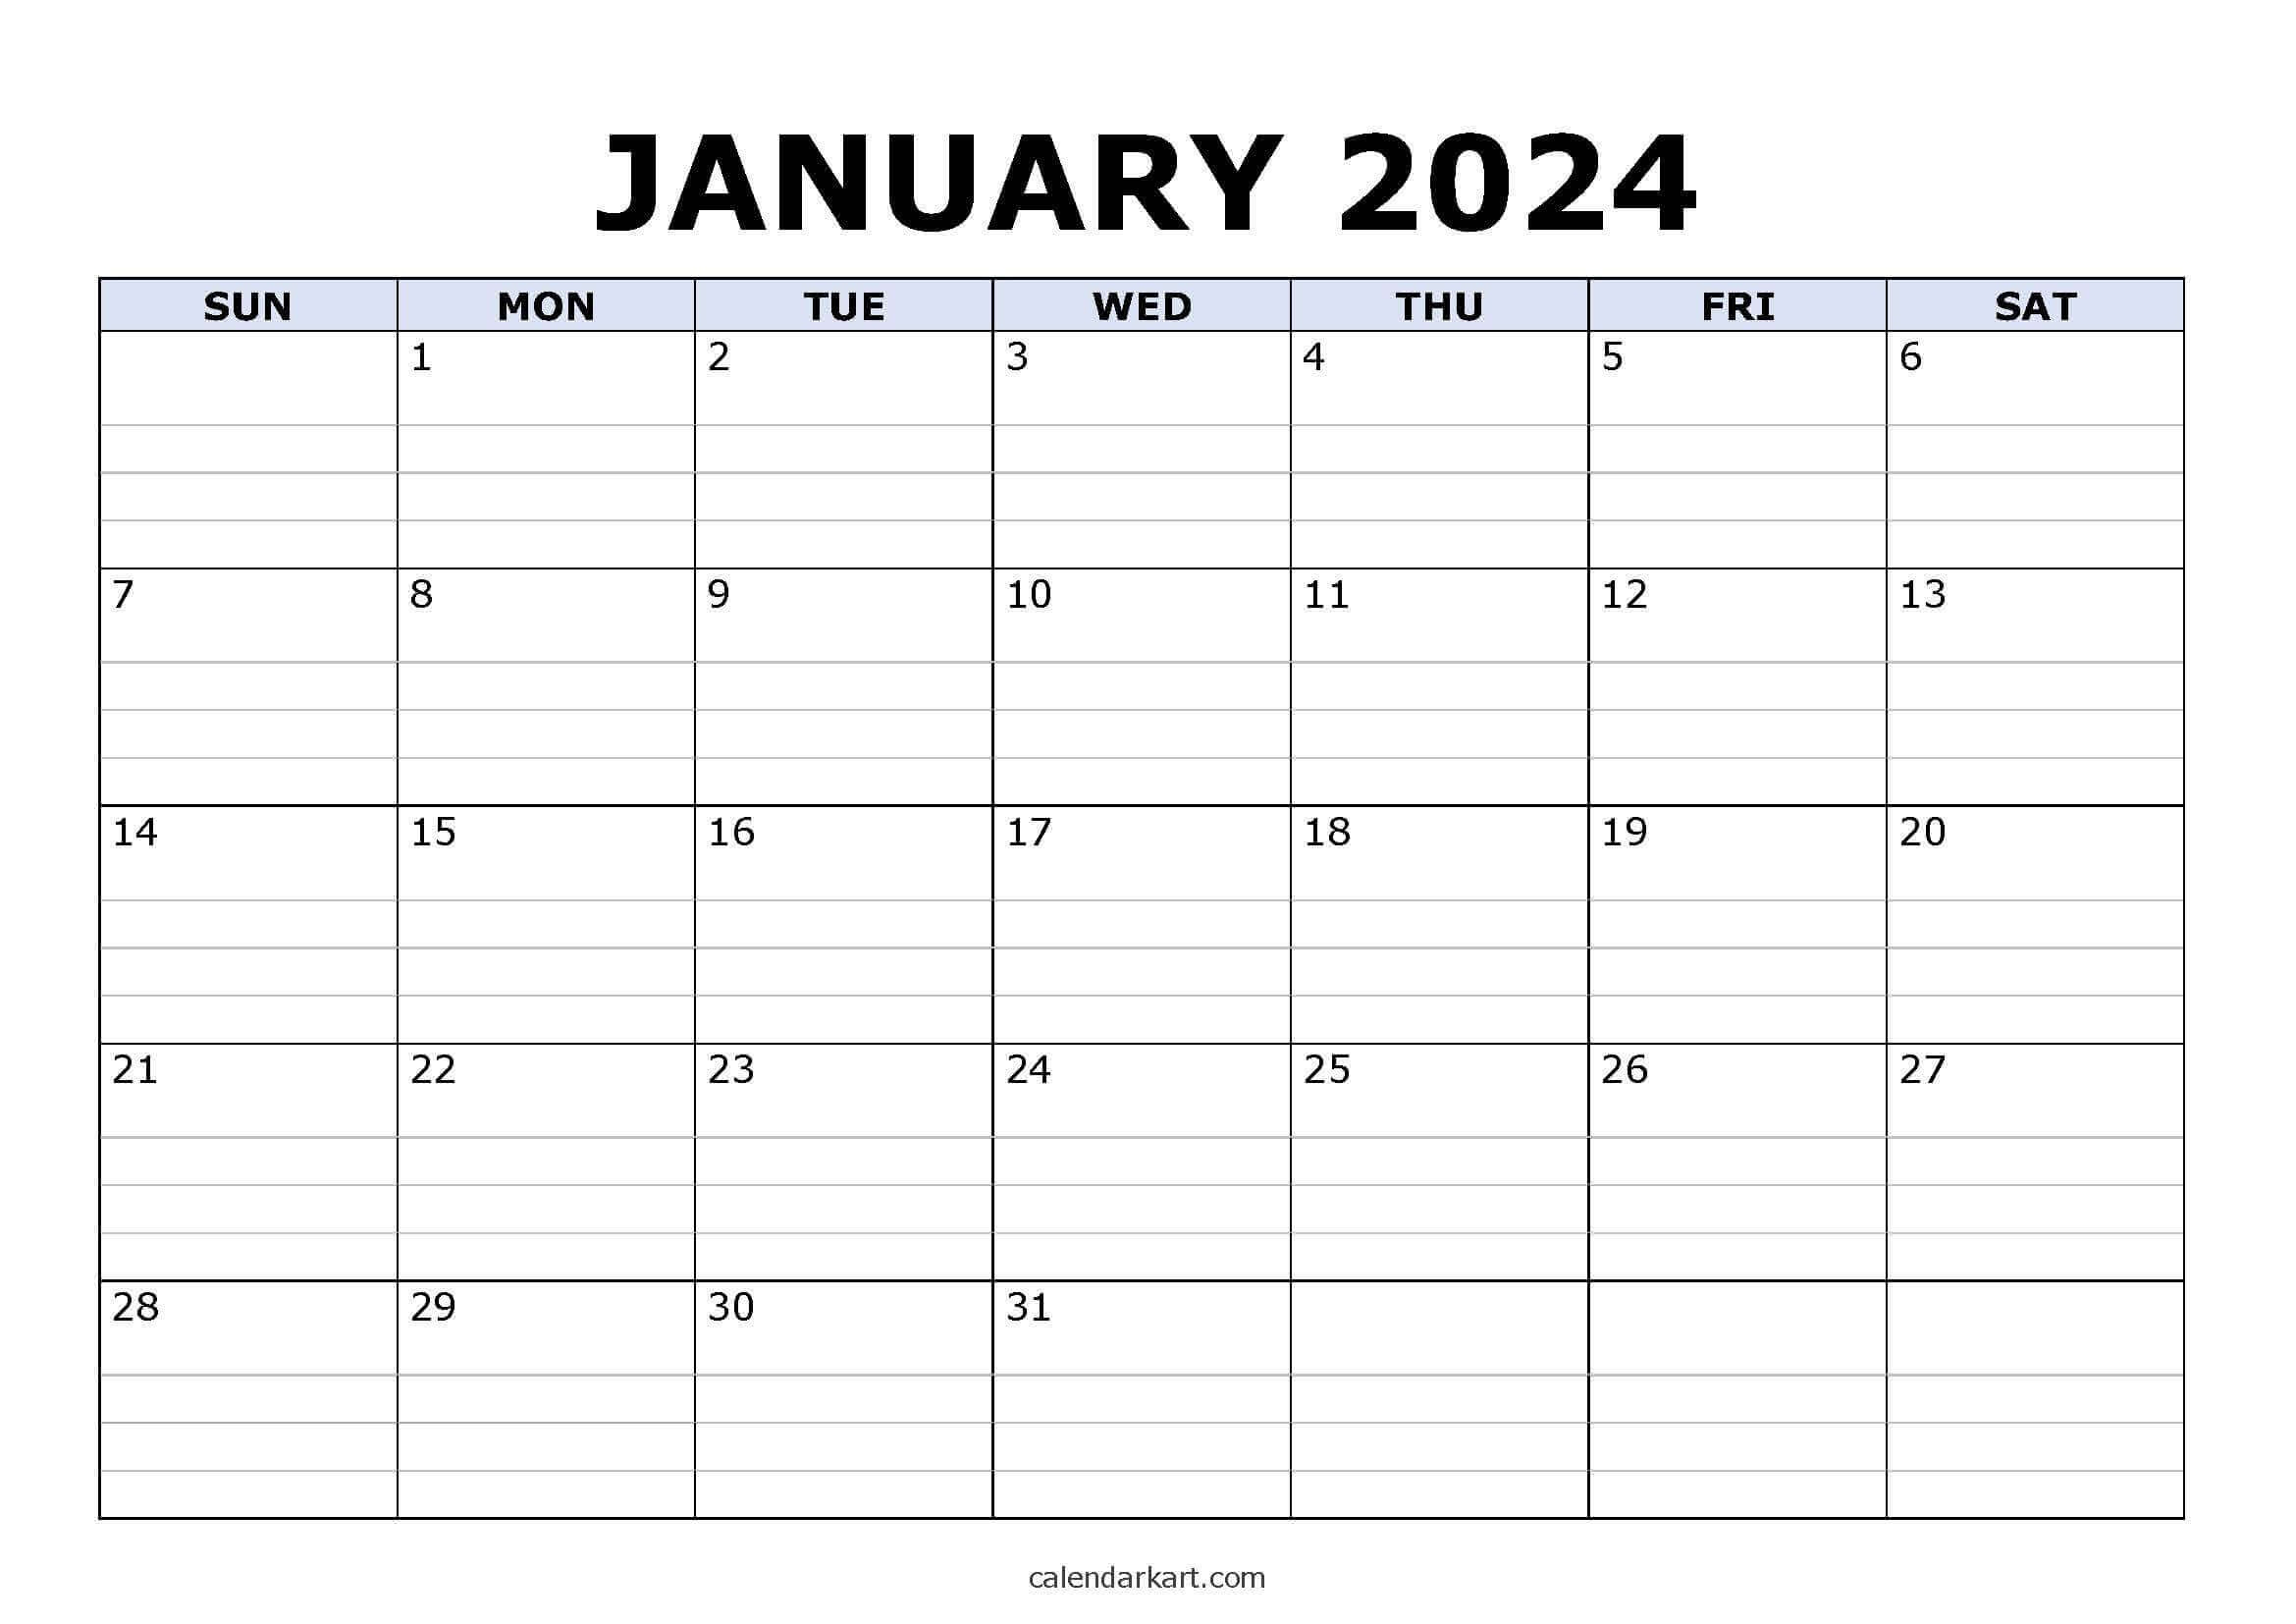 Free Printable January 2024 Calendars - Calendarkart with Free Printable Calendar 2024 Grid